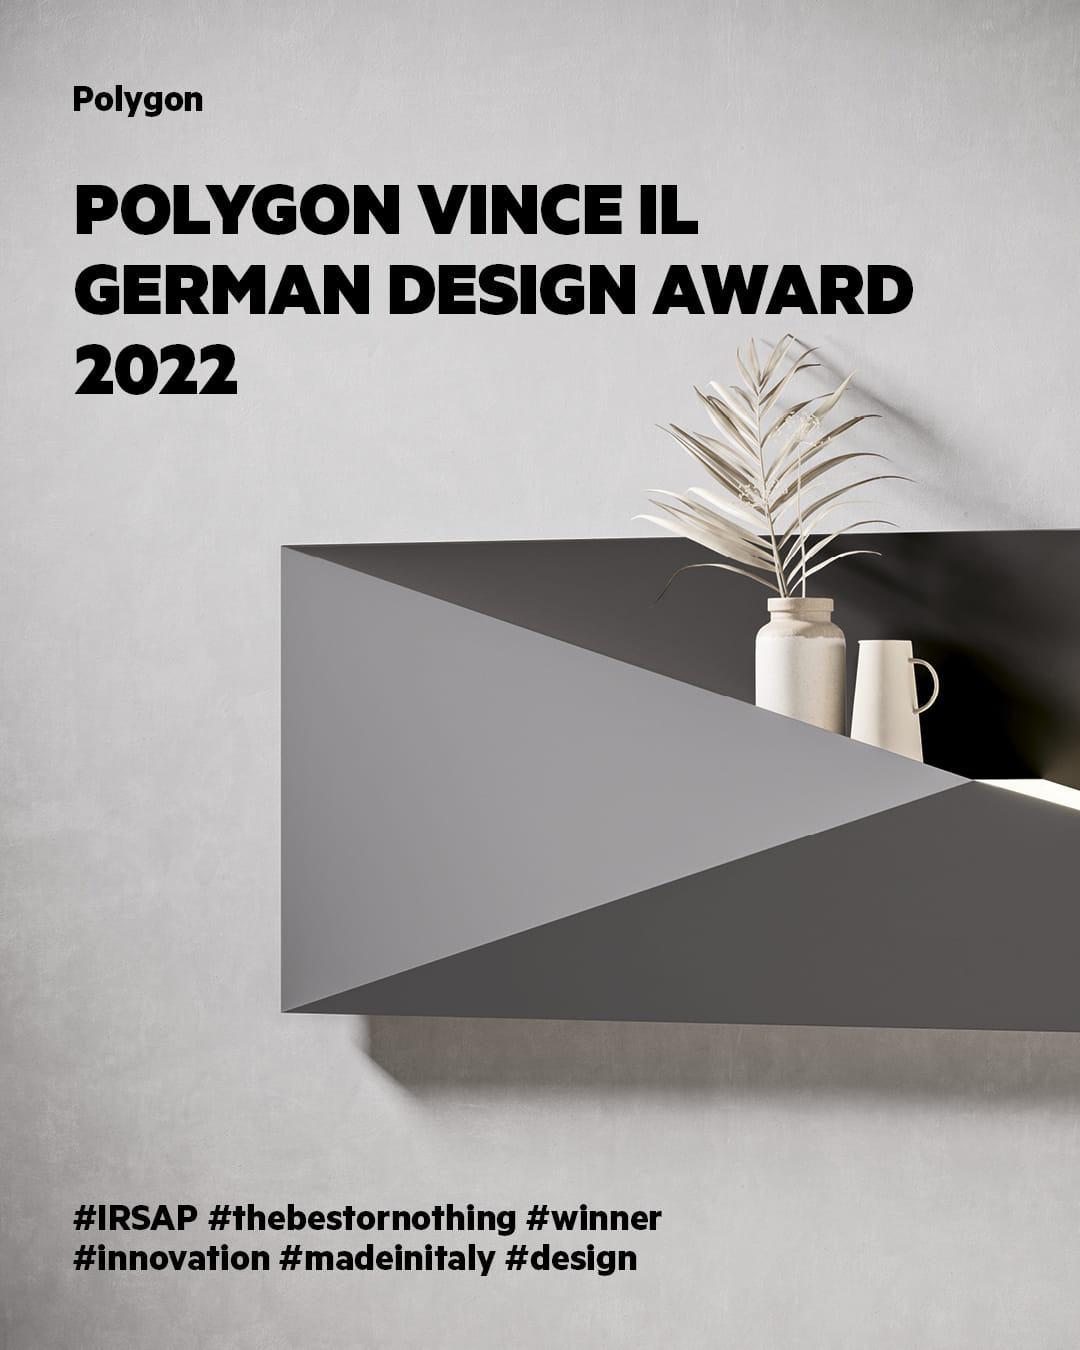 Polygon wins the German Design Award 2022